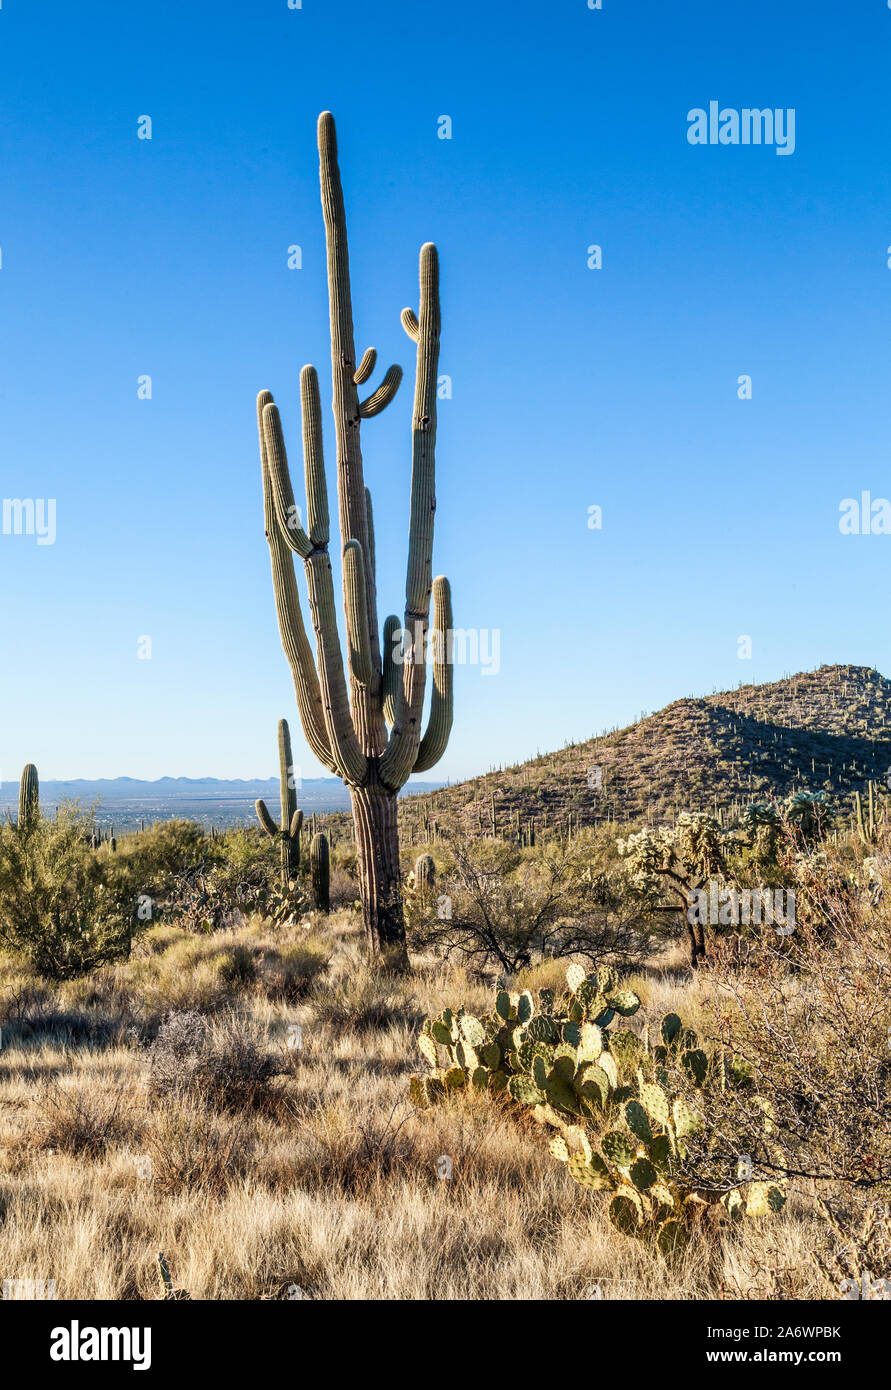 Desert Landscape featuring a large saguaro cactus, Saguaro National Park, Arizona. Stock Photo